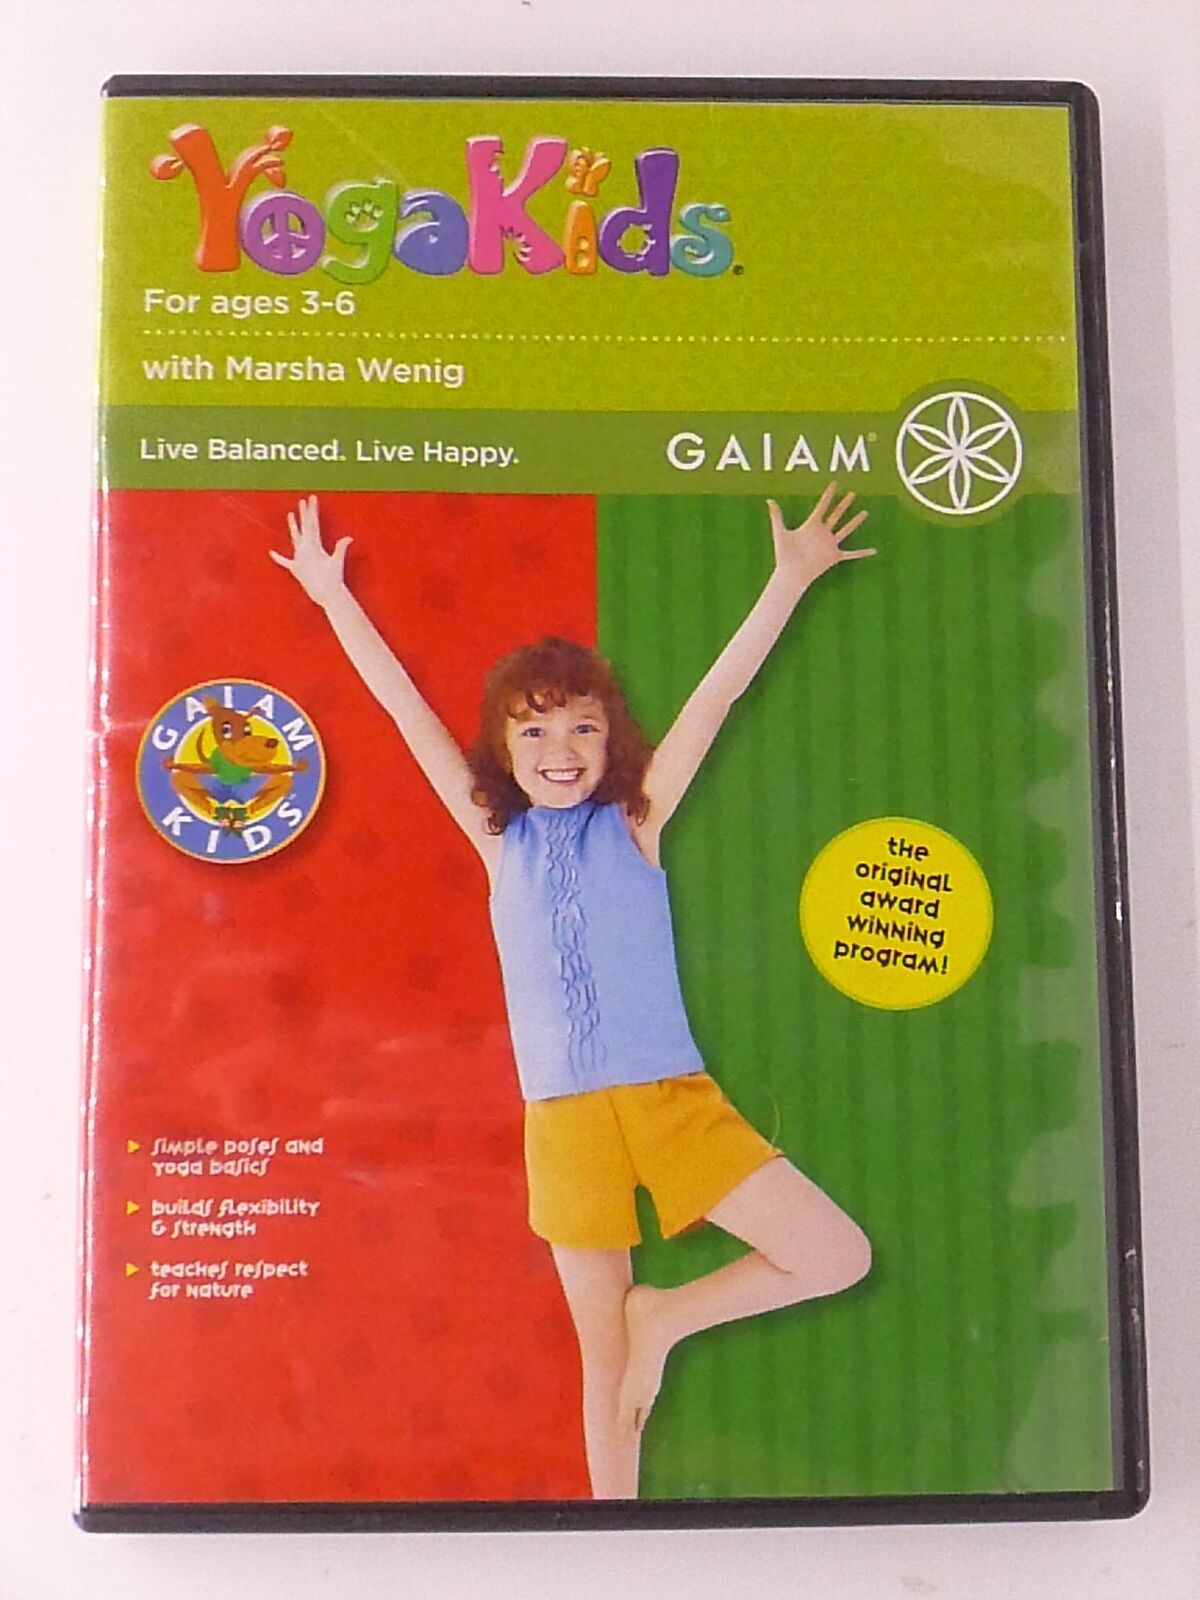 YogaKids - Live Balanced, Live Happy (DVD, Gaiam, exercise) - J0514